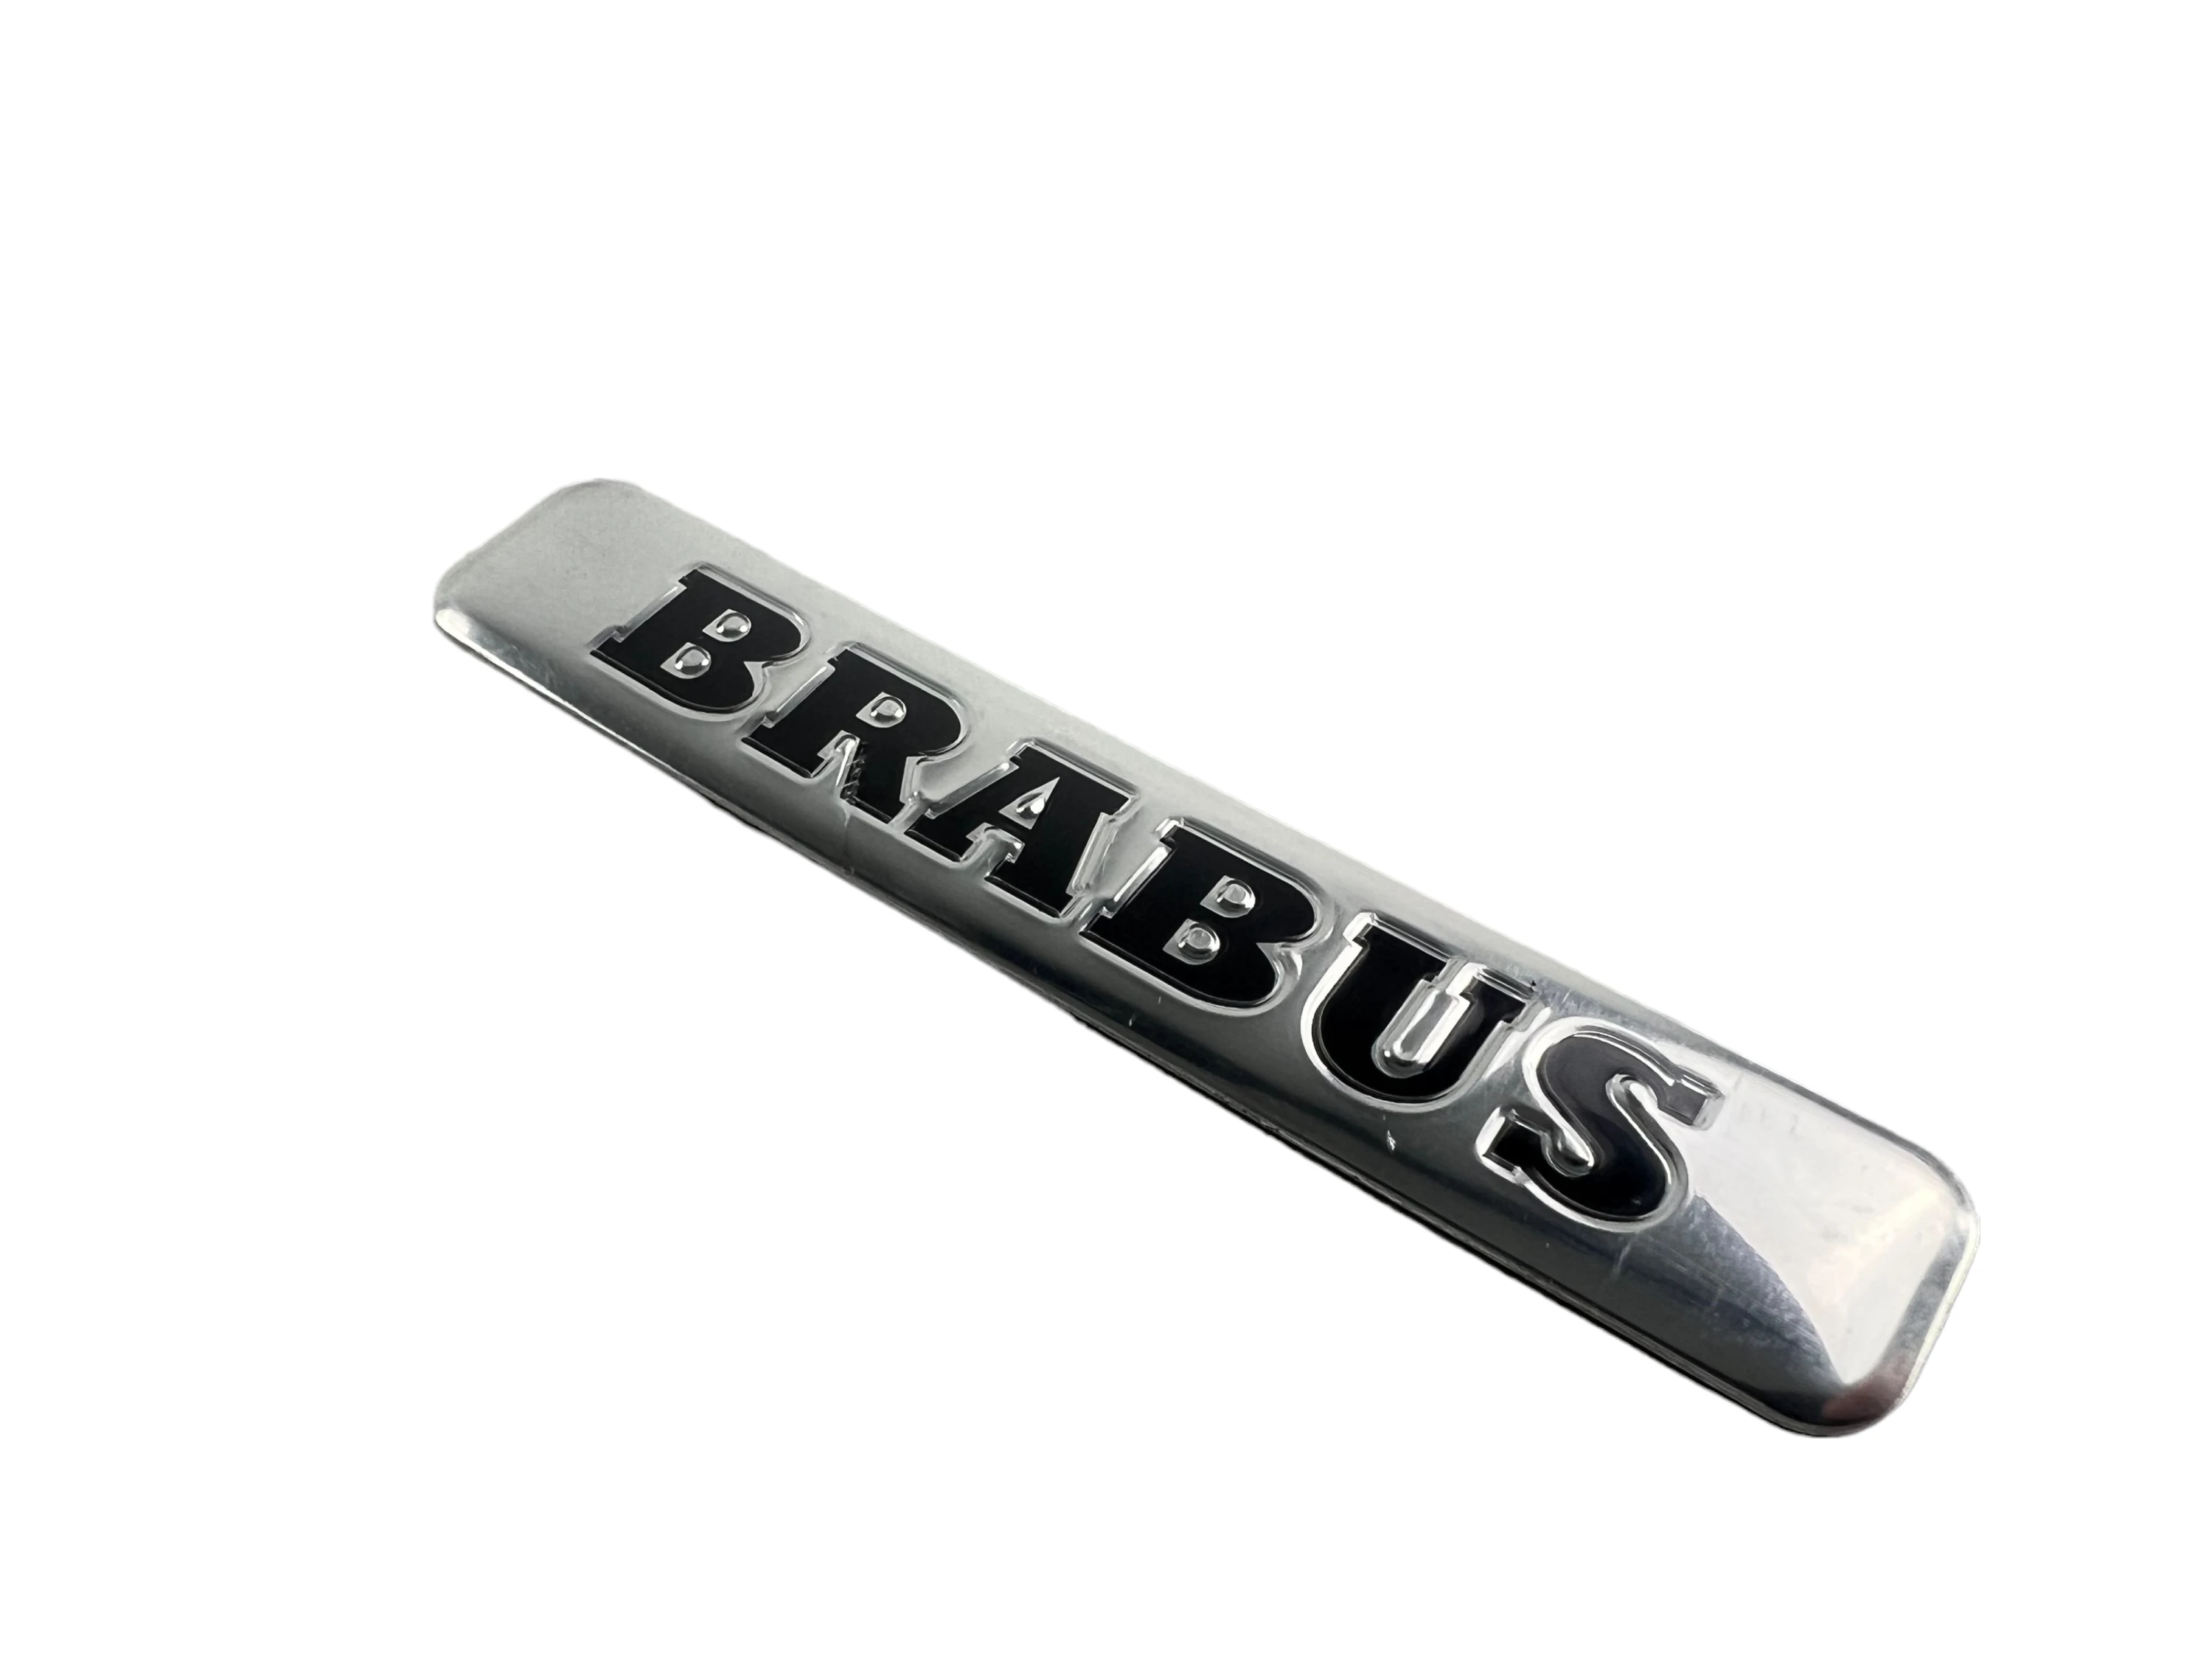 BRABUS Powered by Brabus emblem logo sticker